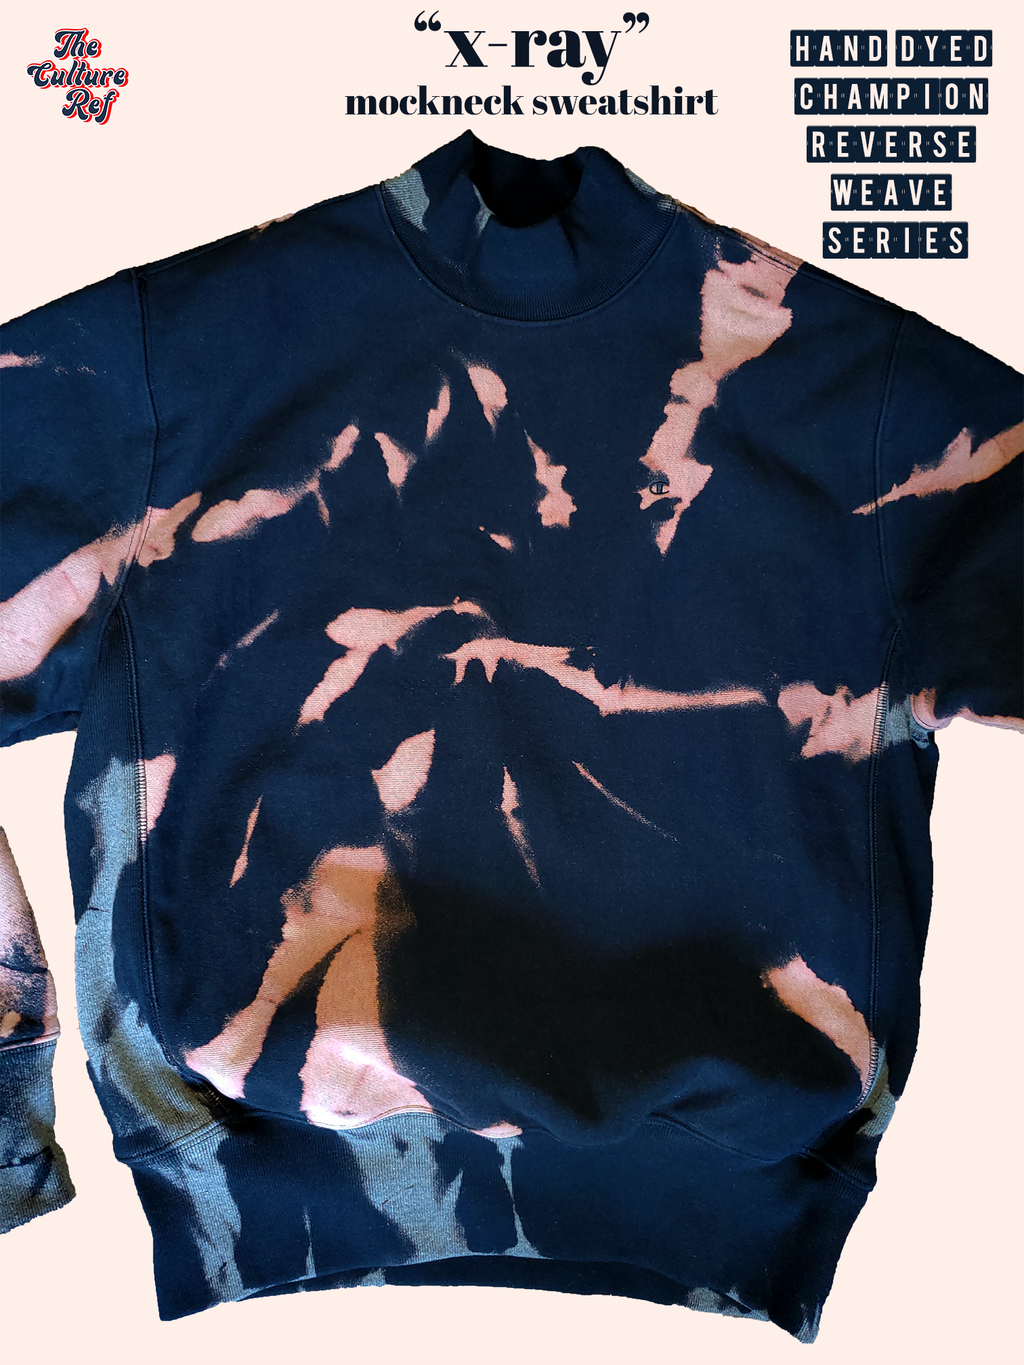 Hand Dyed Mockneck Sweatshirt - Champion Reverse Weave | The Culture Ref Tie Dye Limited Series